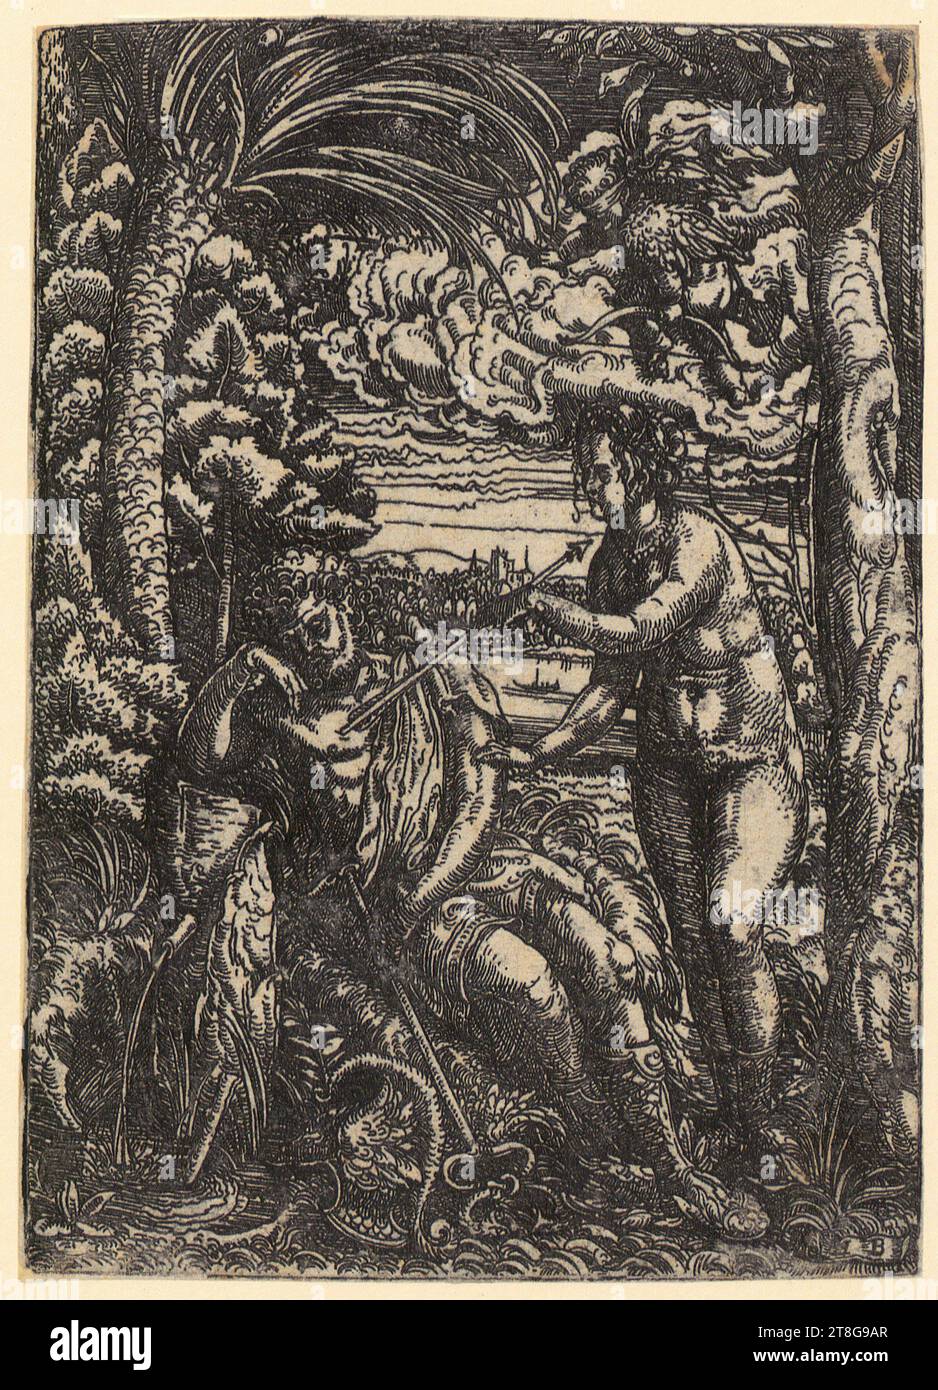 Hans Burgkmair (1473 - 1531), Mercury and Venus, print medium: ca. 1520, iron etching, sheet size: 18.3 x 13.1 cm, monogrammed 'HB' on lower right panel Stock Photo